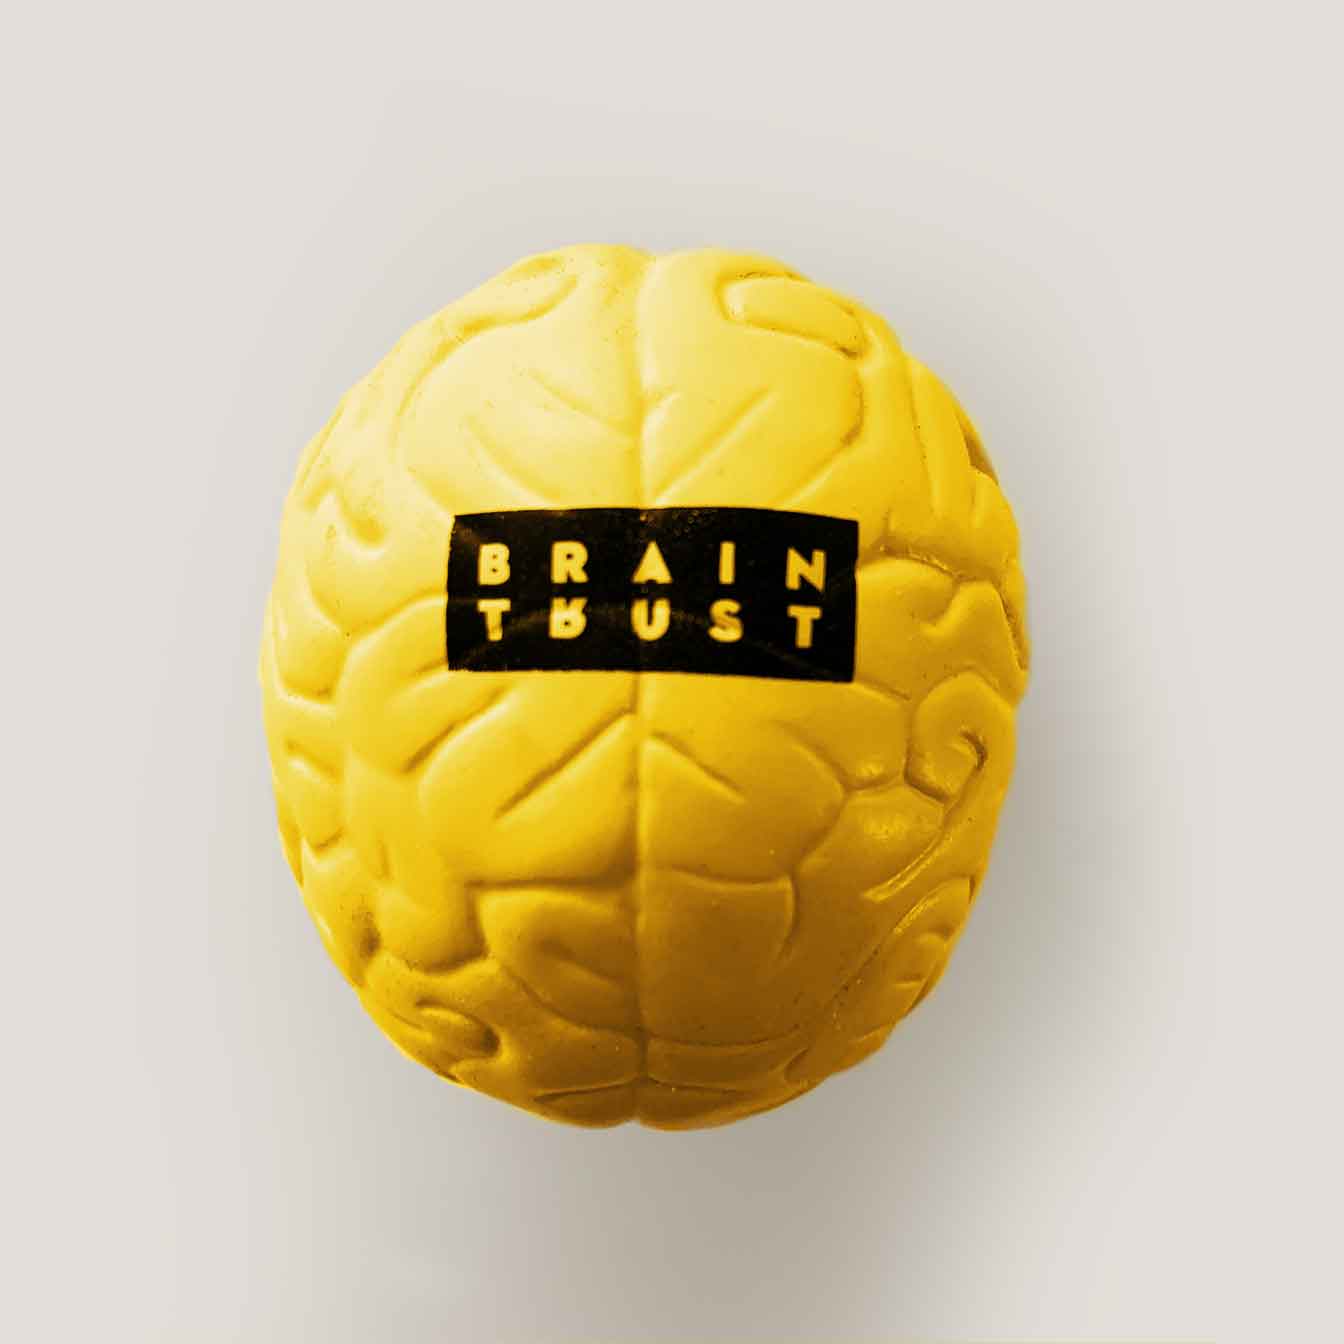 Braintrust Team Member Branded Brain